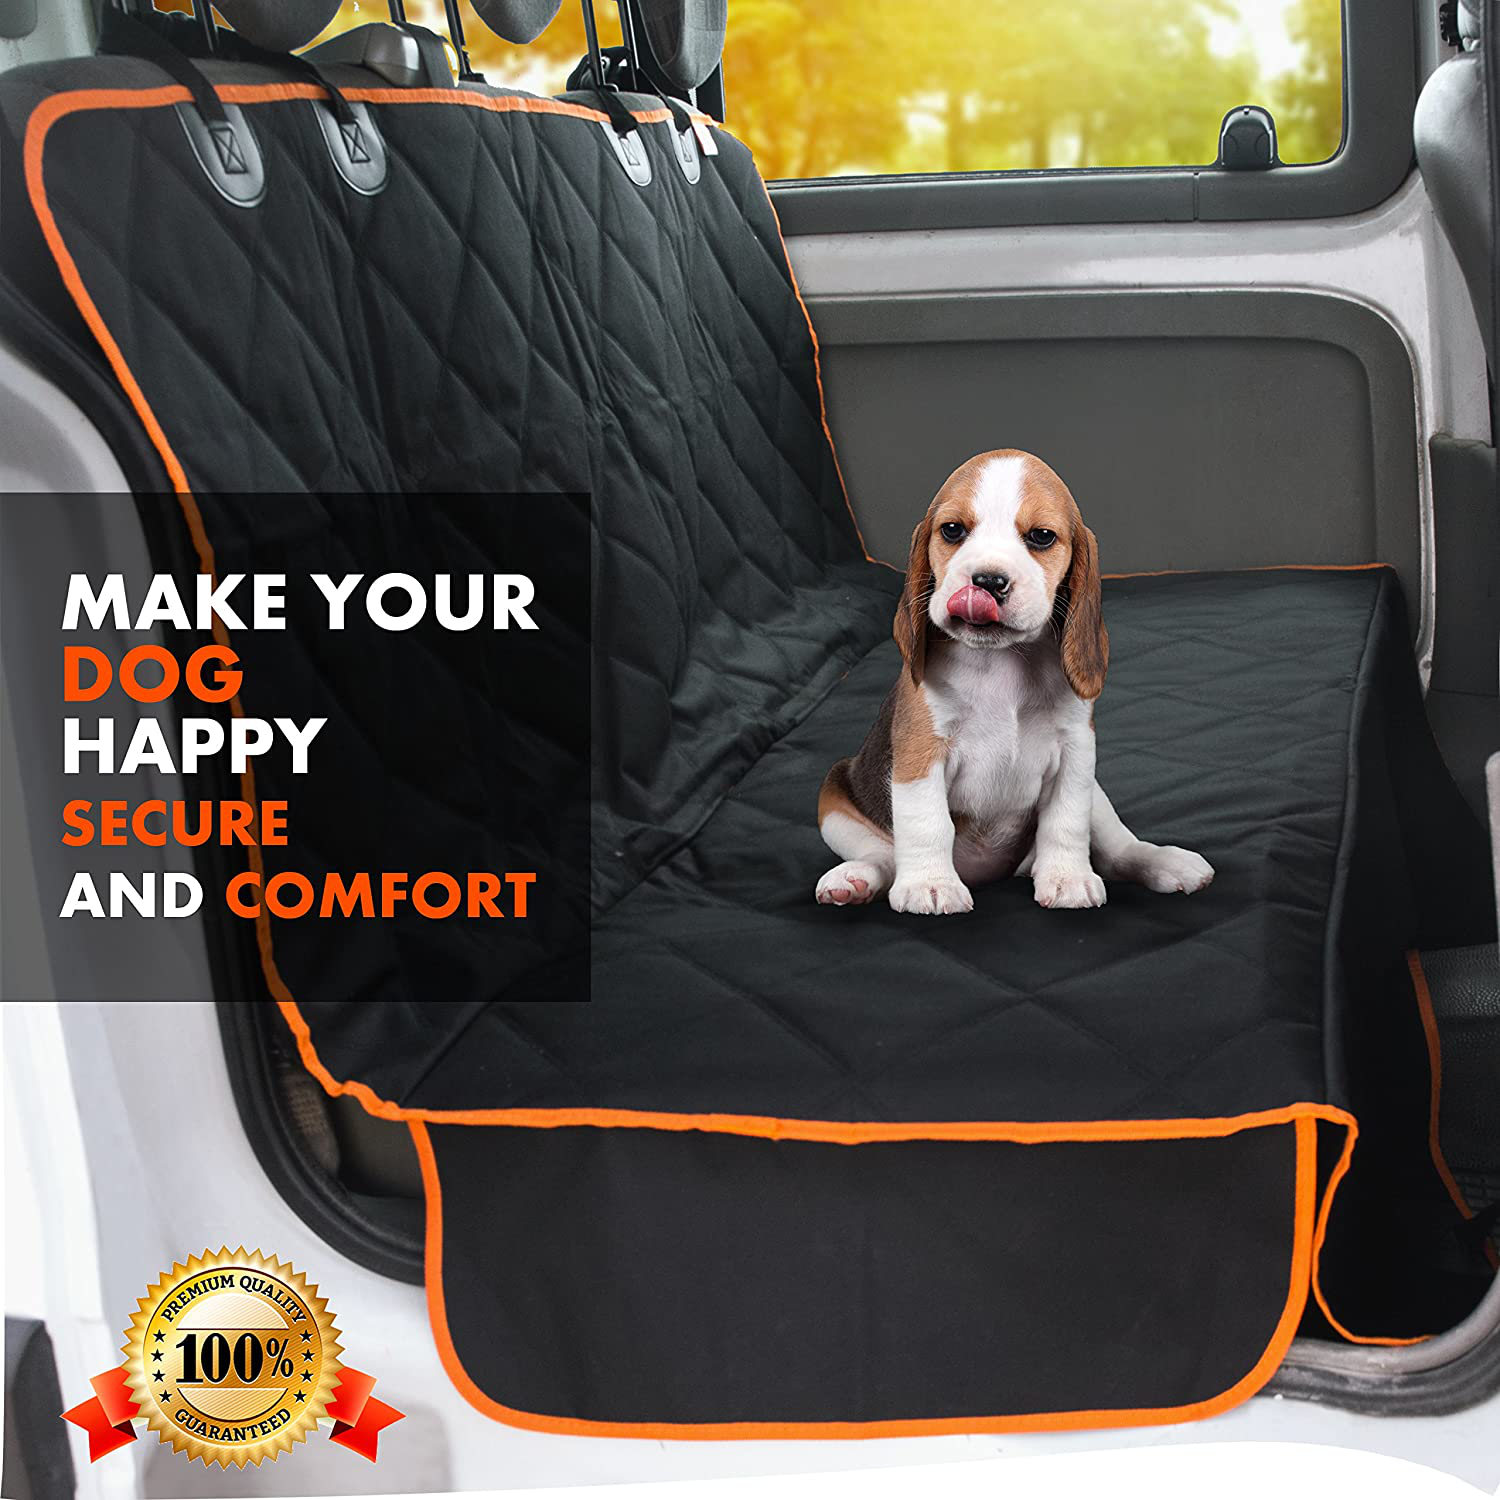 Doggie World Dog Car Seat Cover - Cars, Trucks and Suvs Luxury